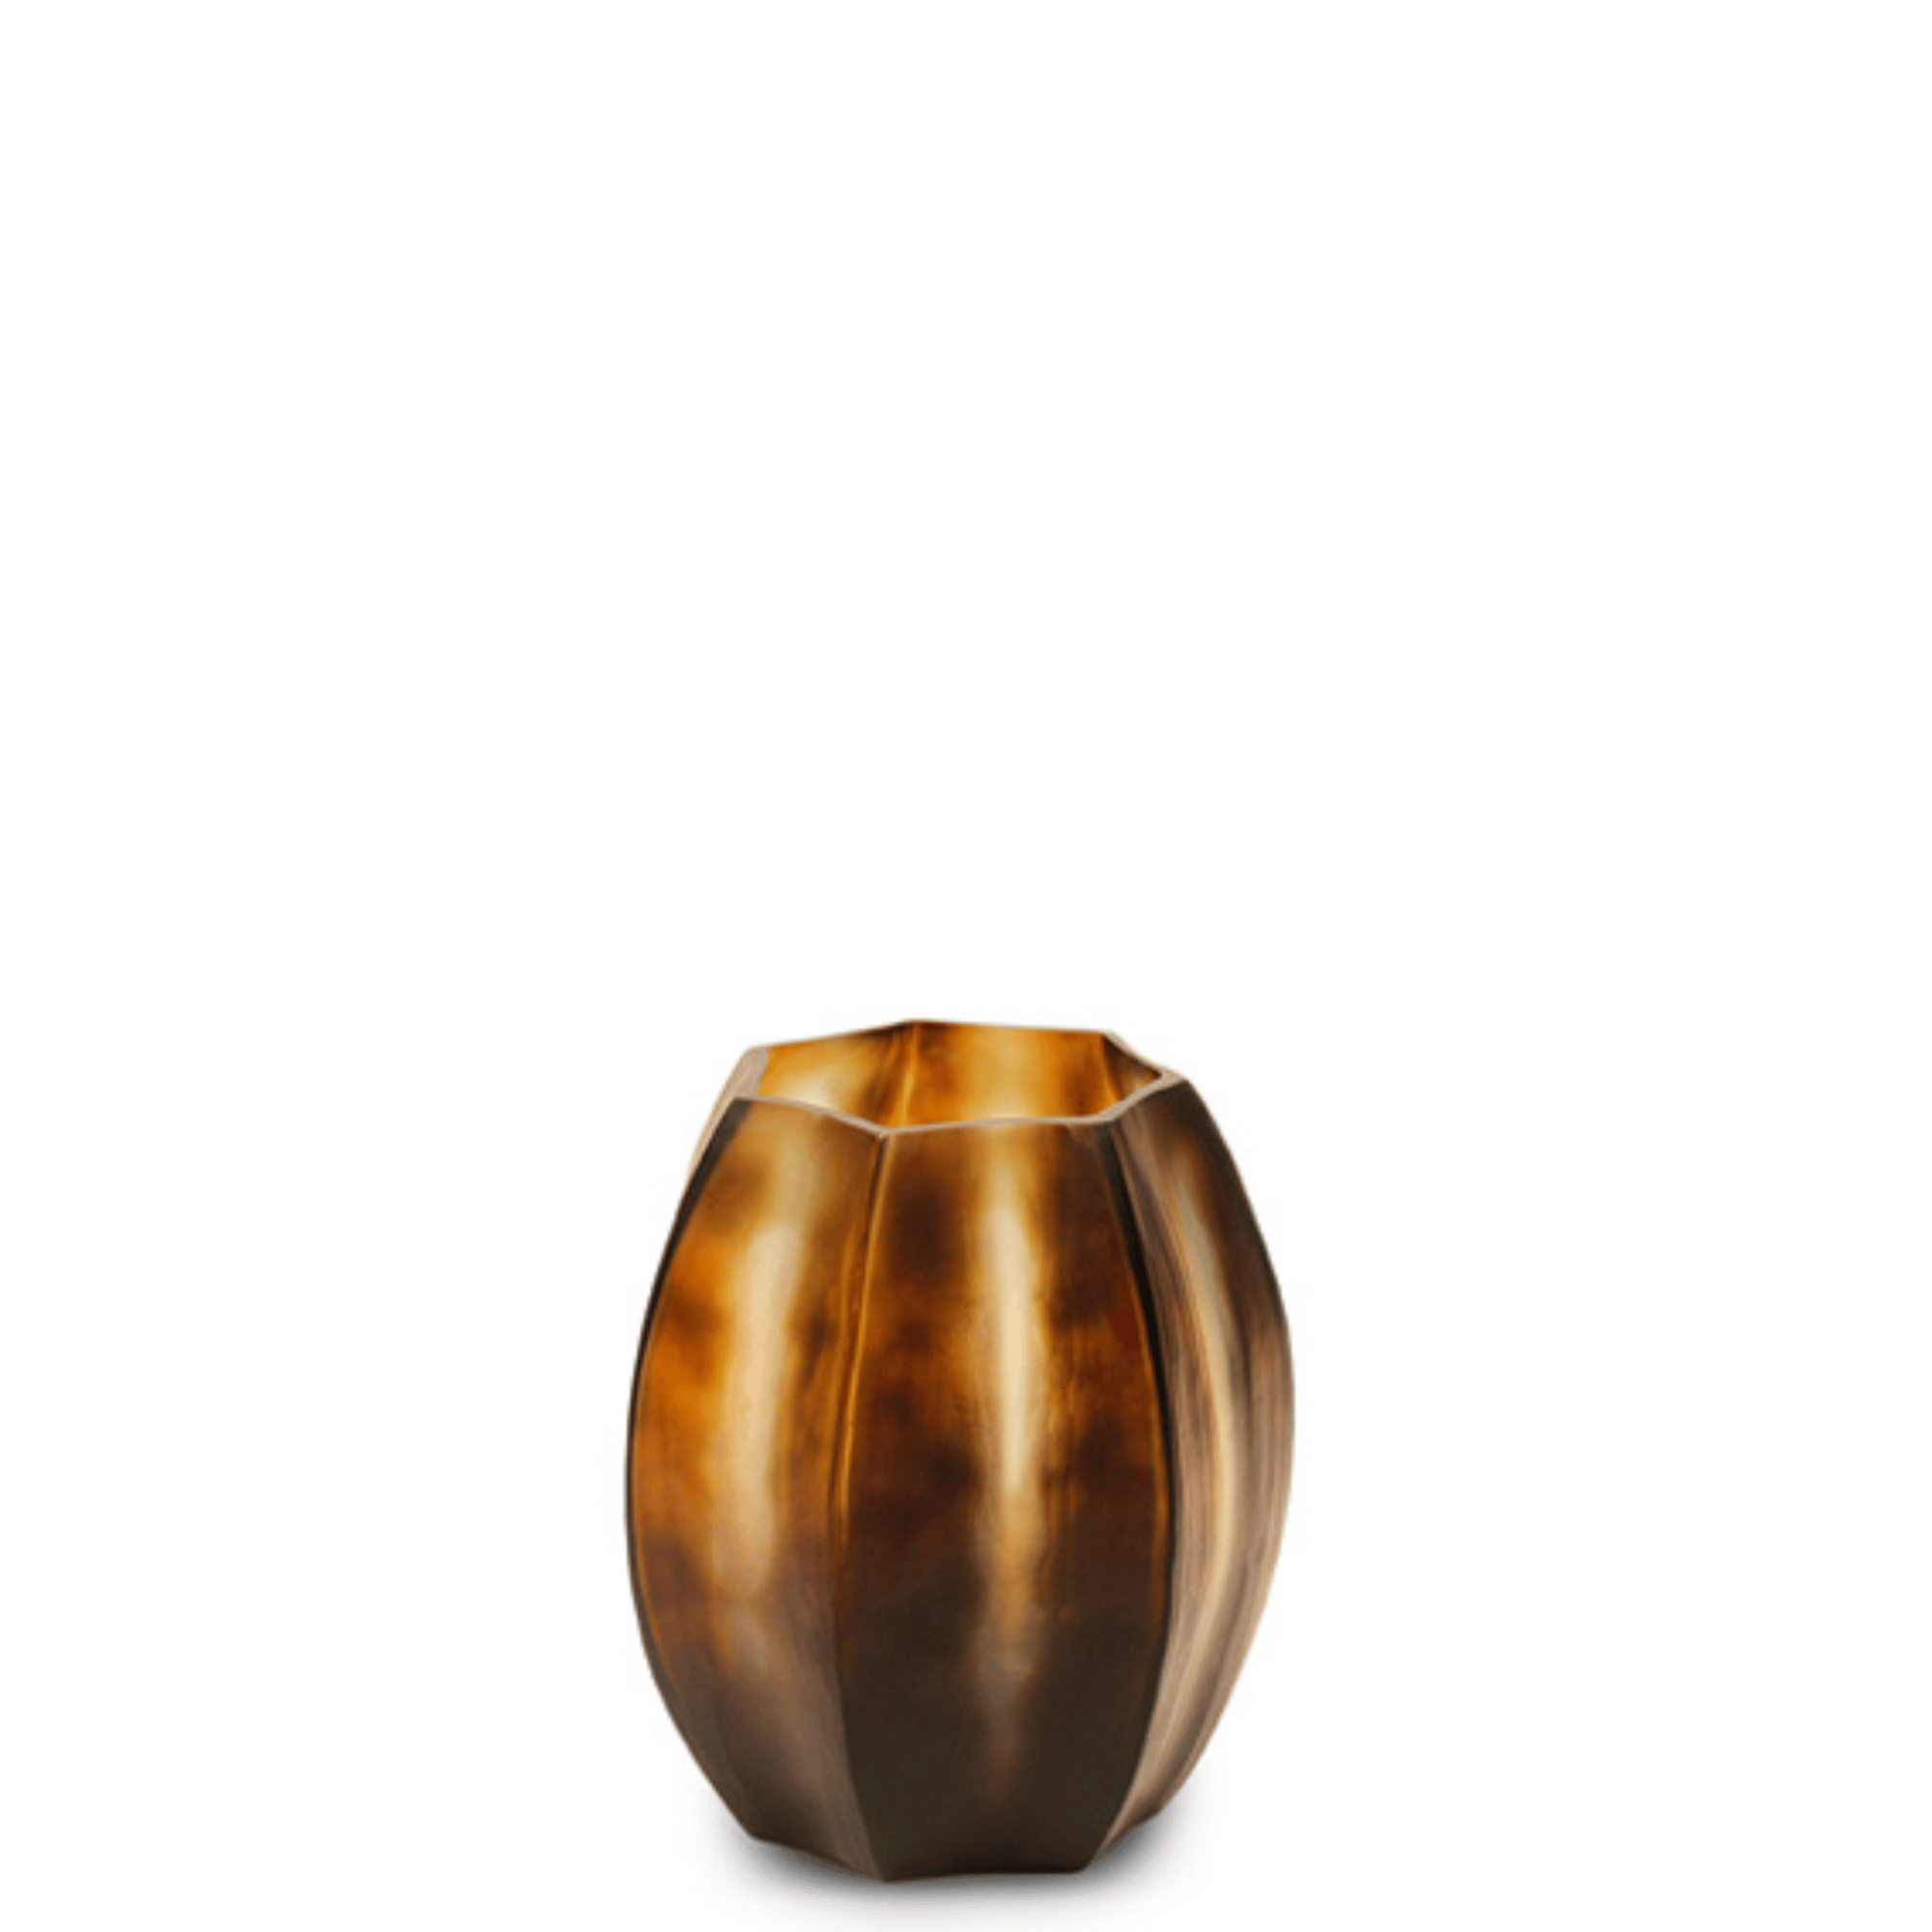 Guaxs brown glass vase